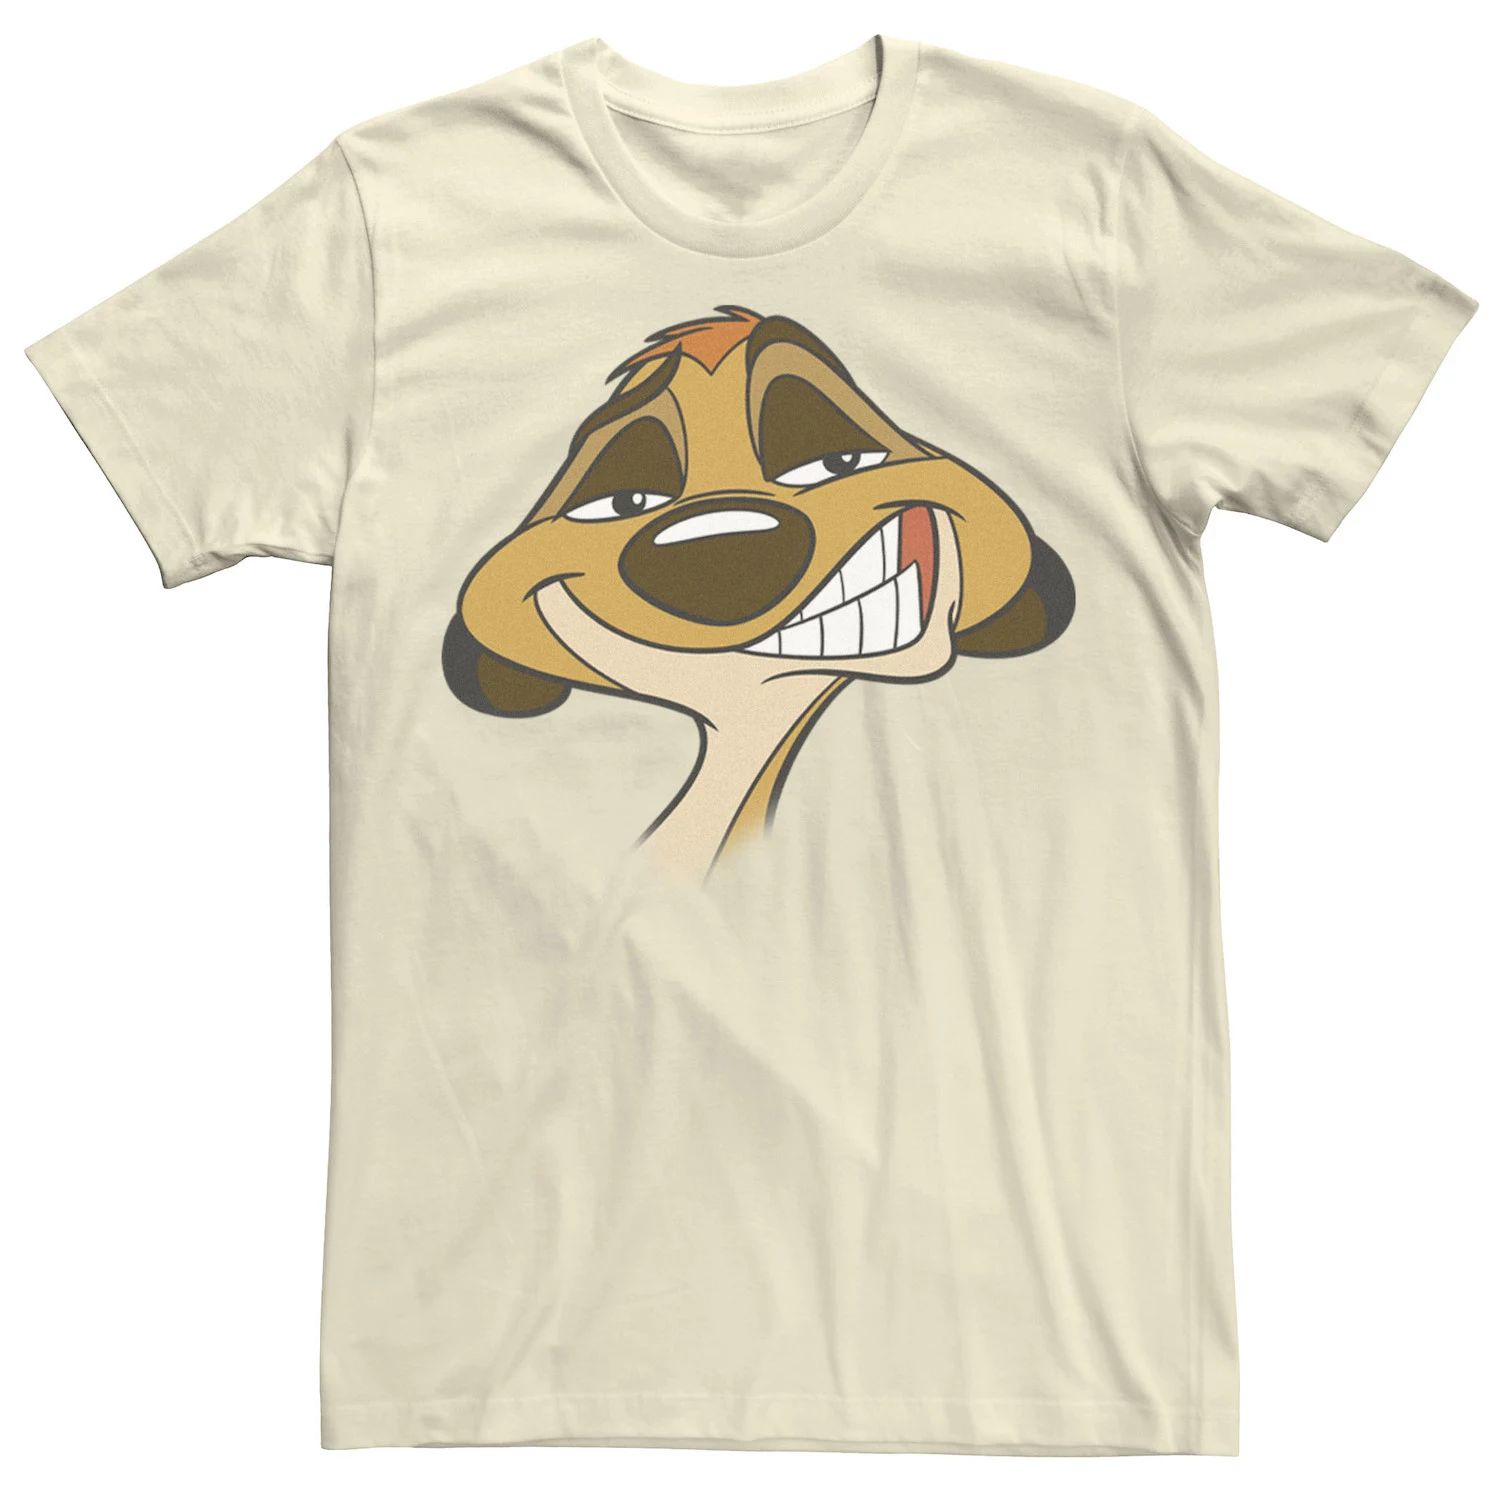 Мужская футболка Disney The Lion King Timon с большим лицом Licensed Character